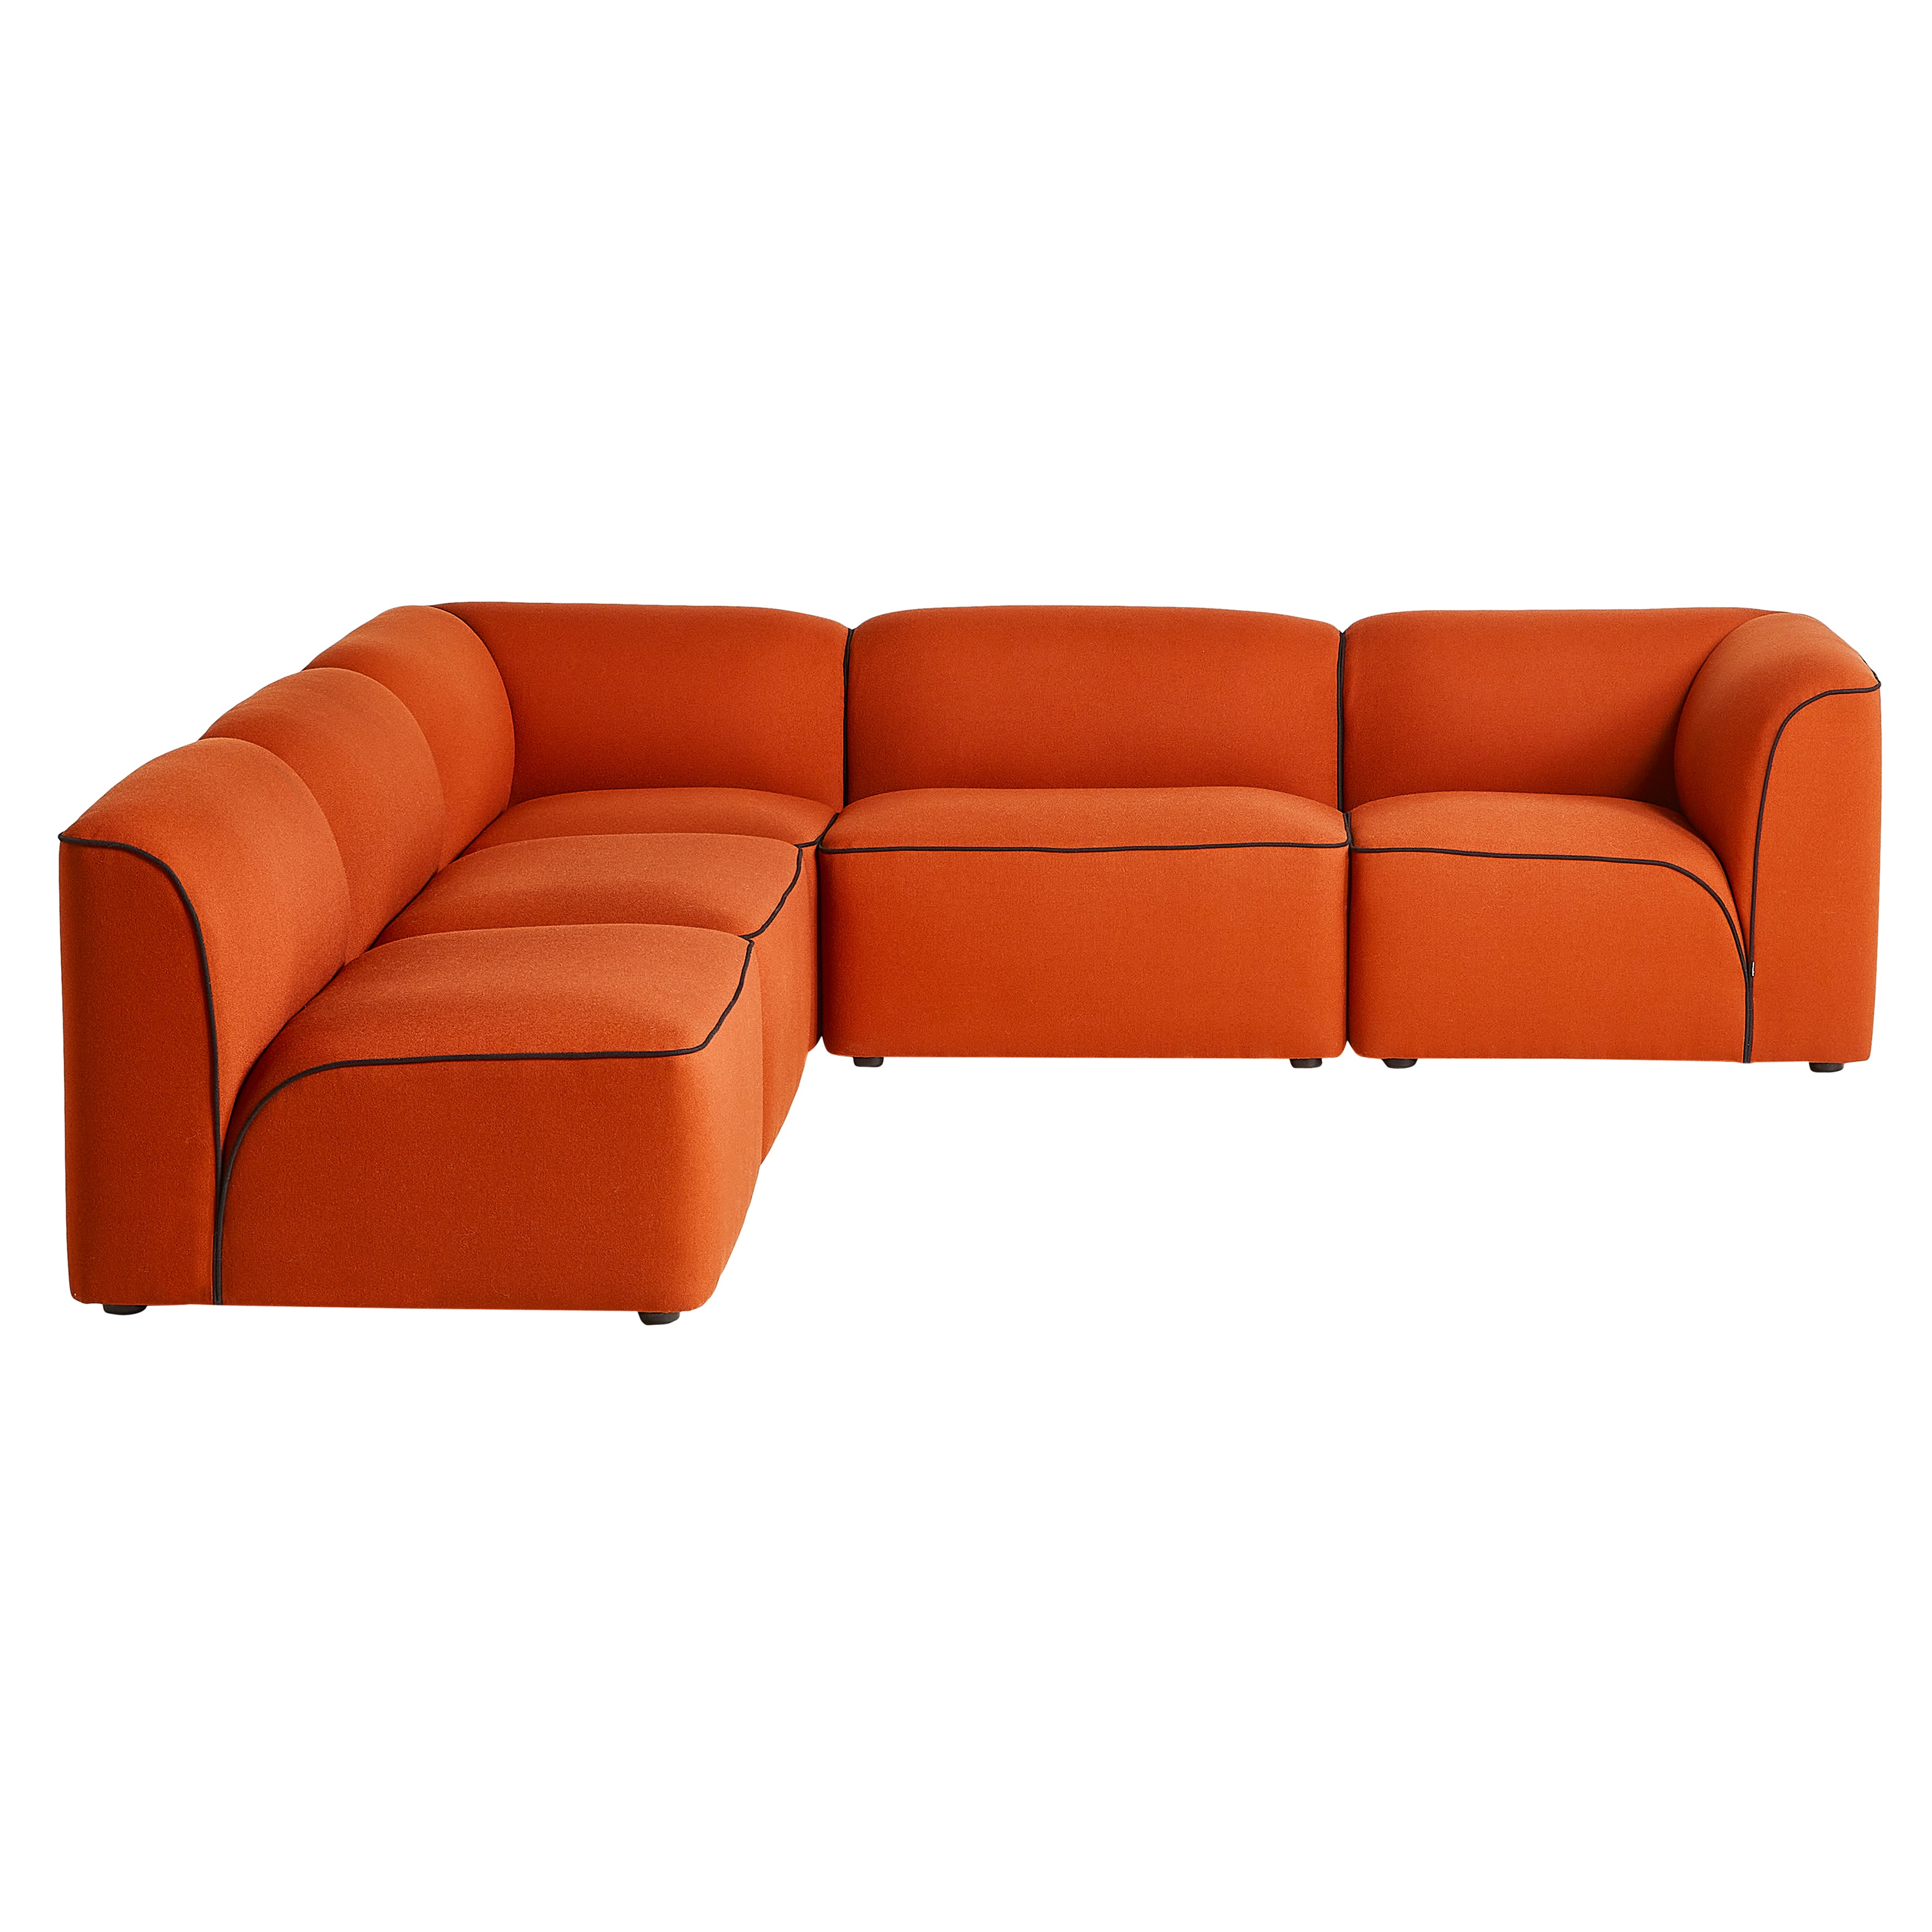 Flora Modular Sofa: Configuration 5